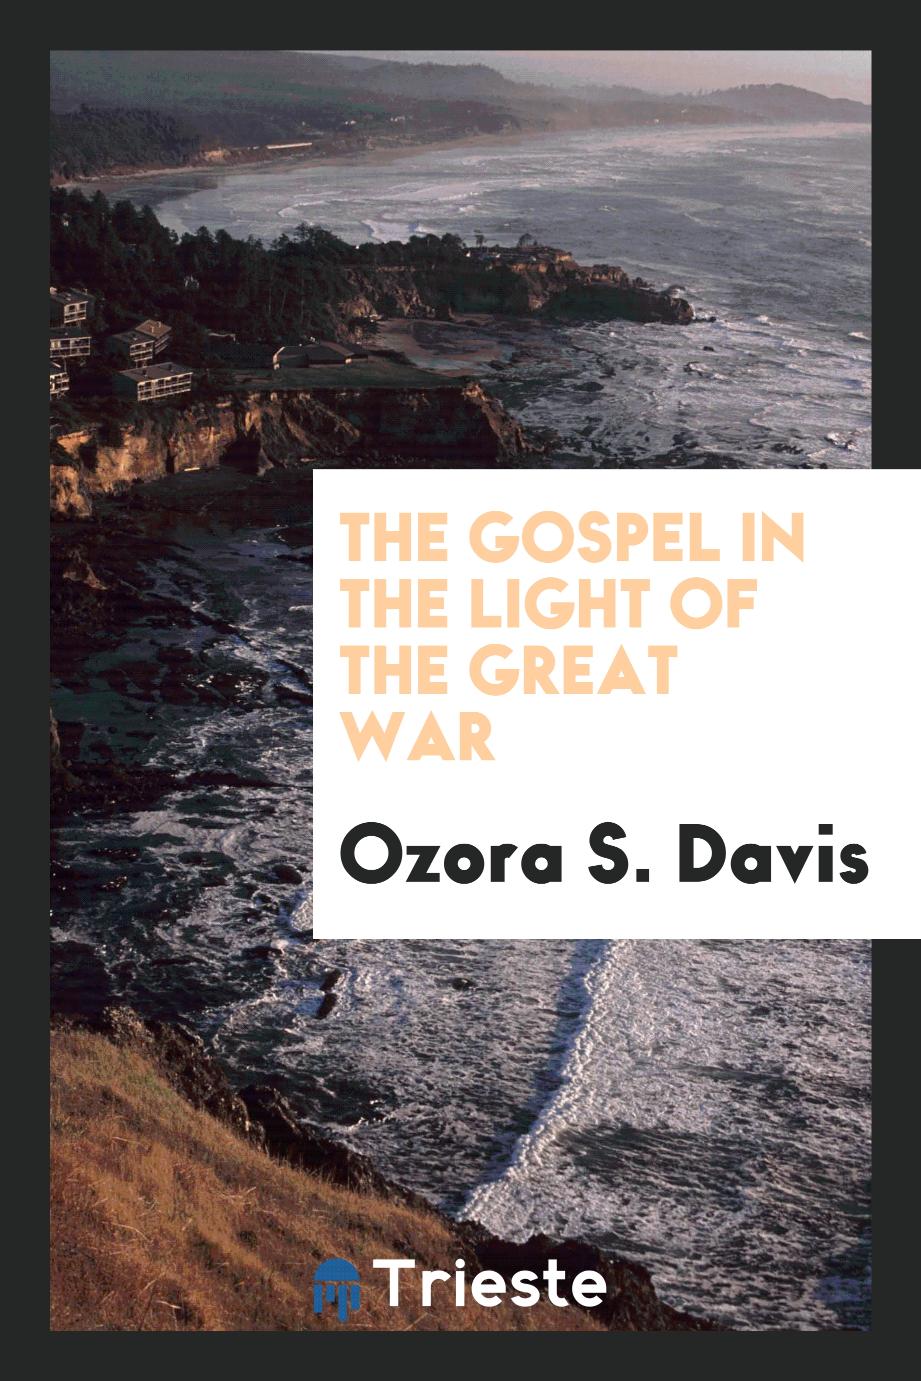 Ozora S. Davis - The gospel in the light of the great war